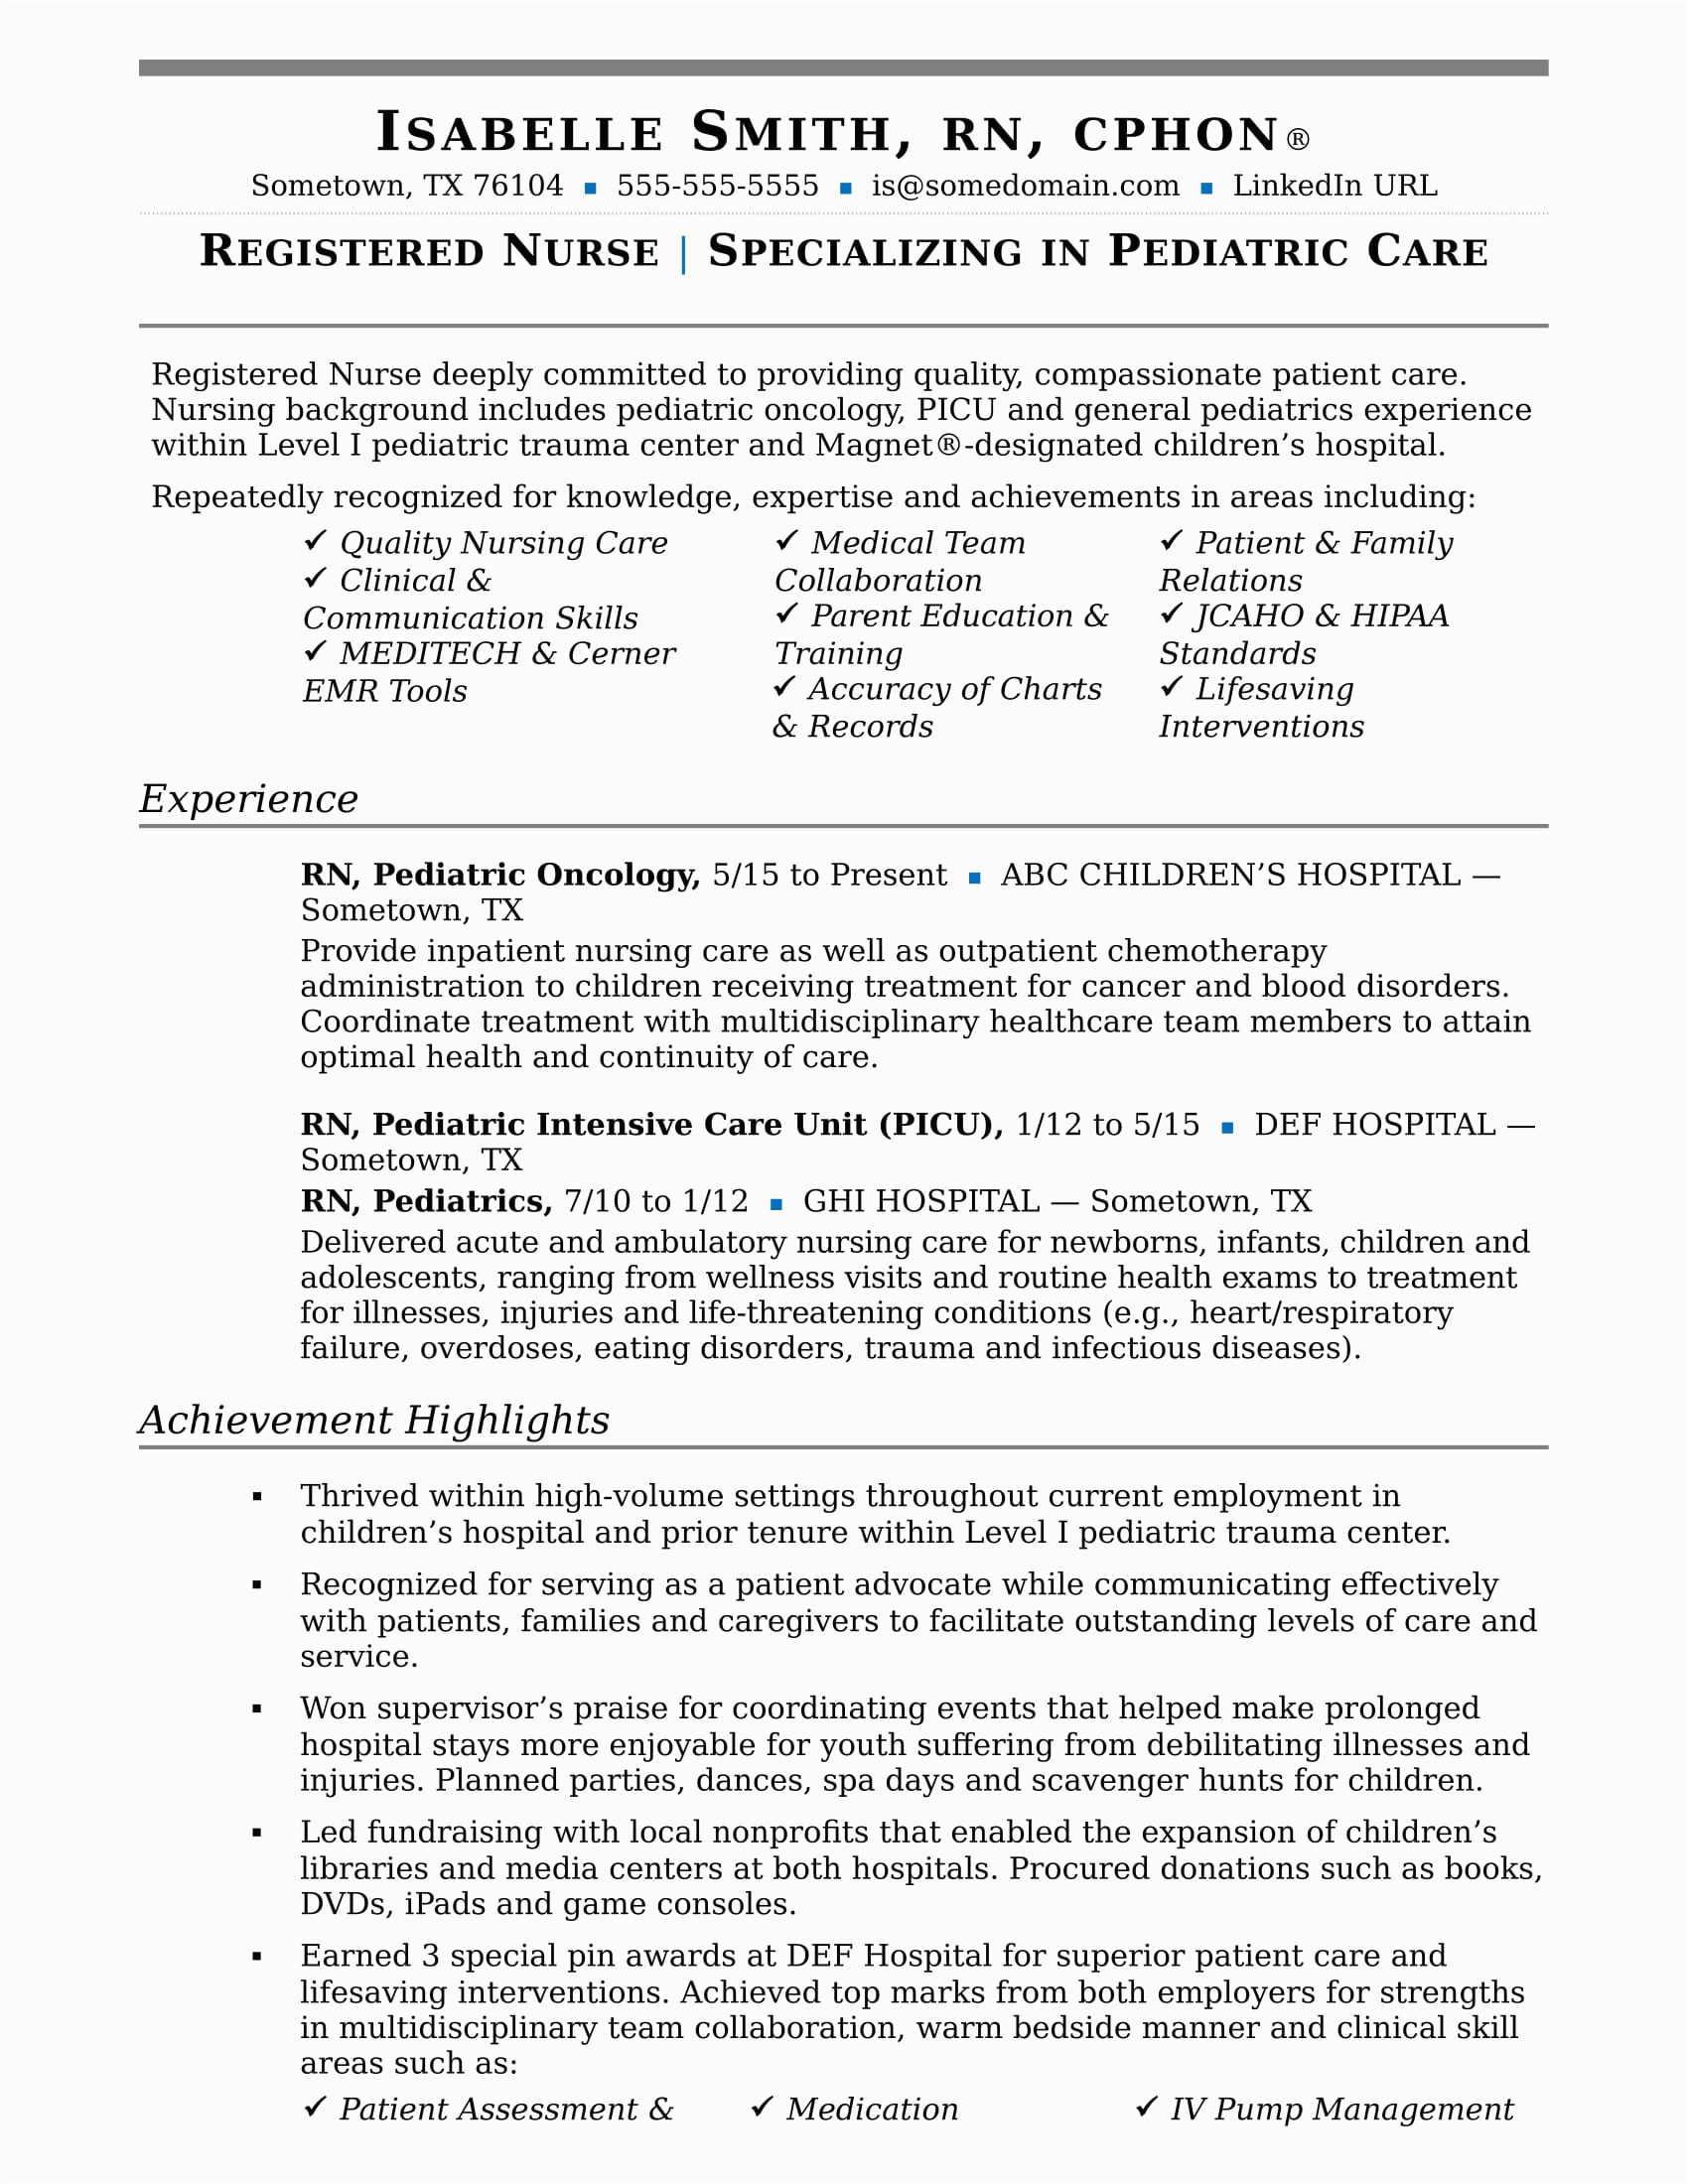 Sample Nursing Resume with Clinical Experience Nurse Resume Sample